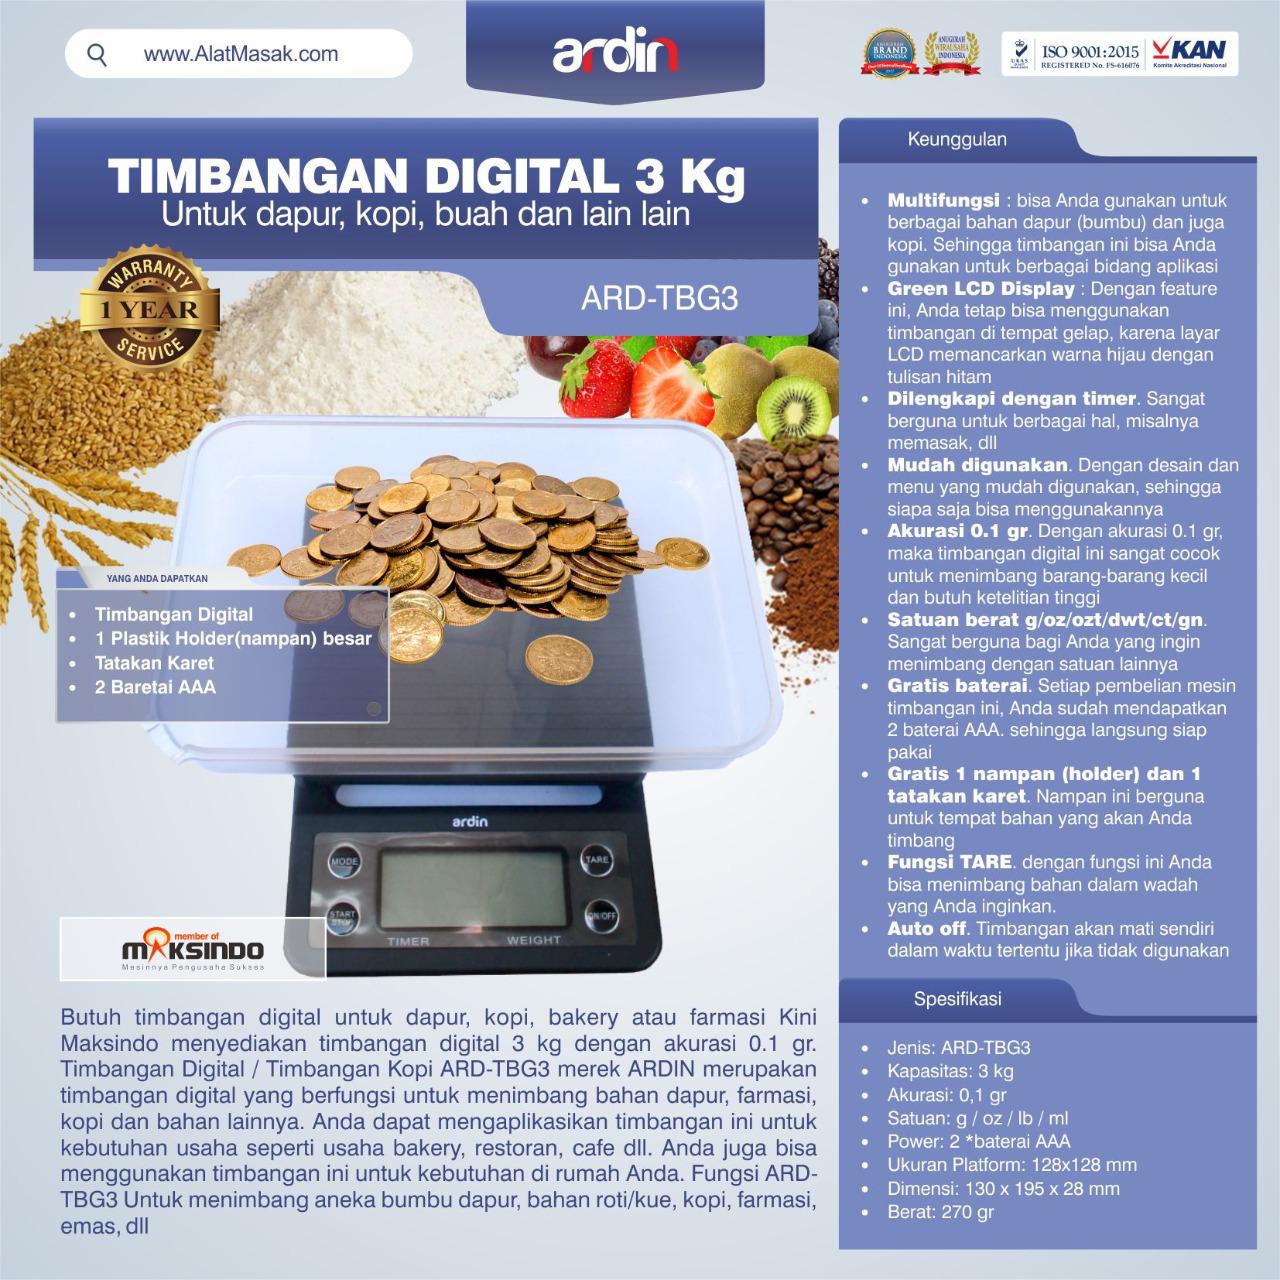 Jual Timbangan Digital 3 kg / Timbangan Kopi ARD-TBG3 di Semarang